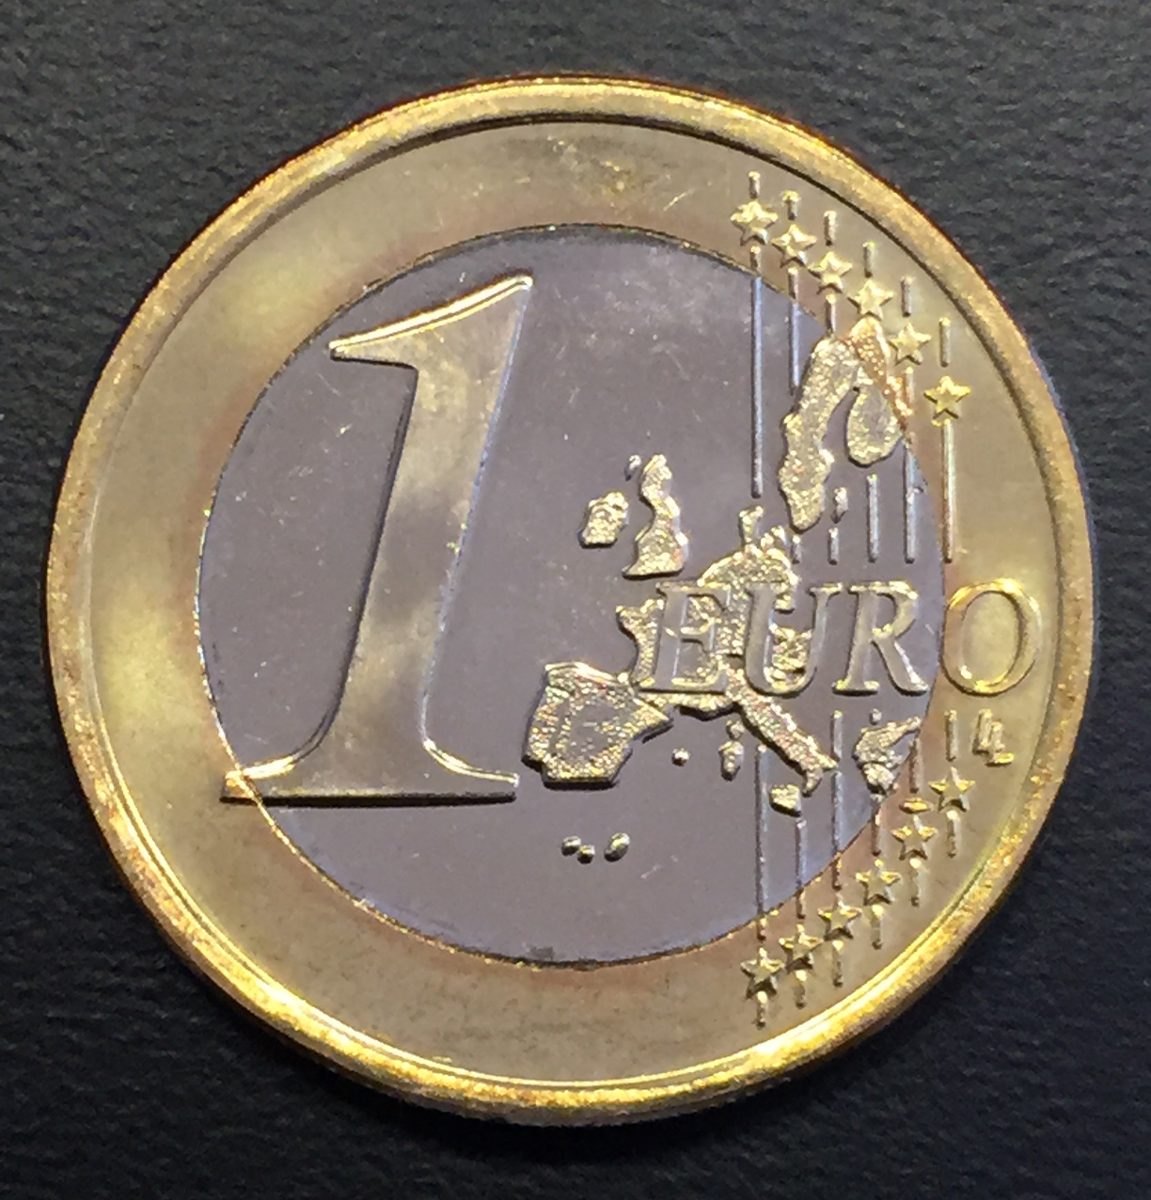 Fin032 Moneda Finlandia 1  Euro  2000 Unc bu Ayff 193 00 